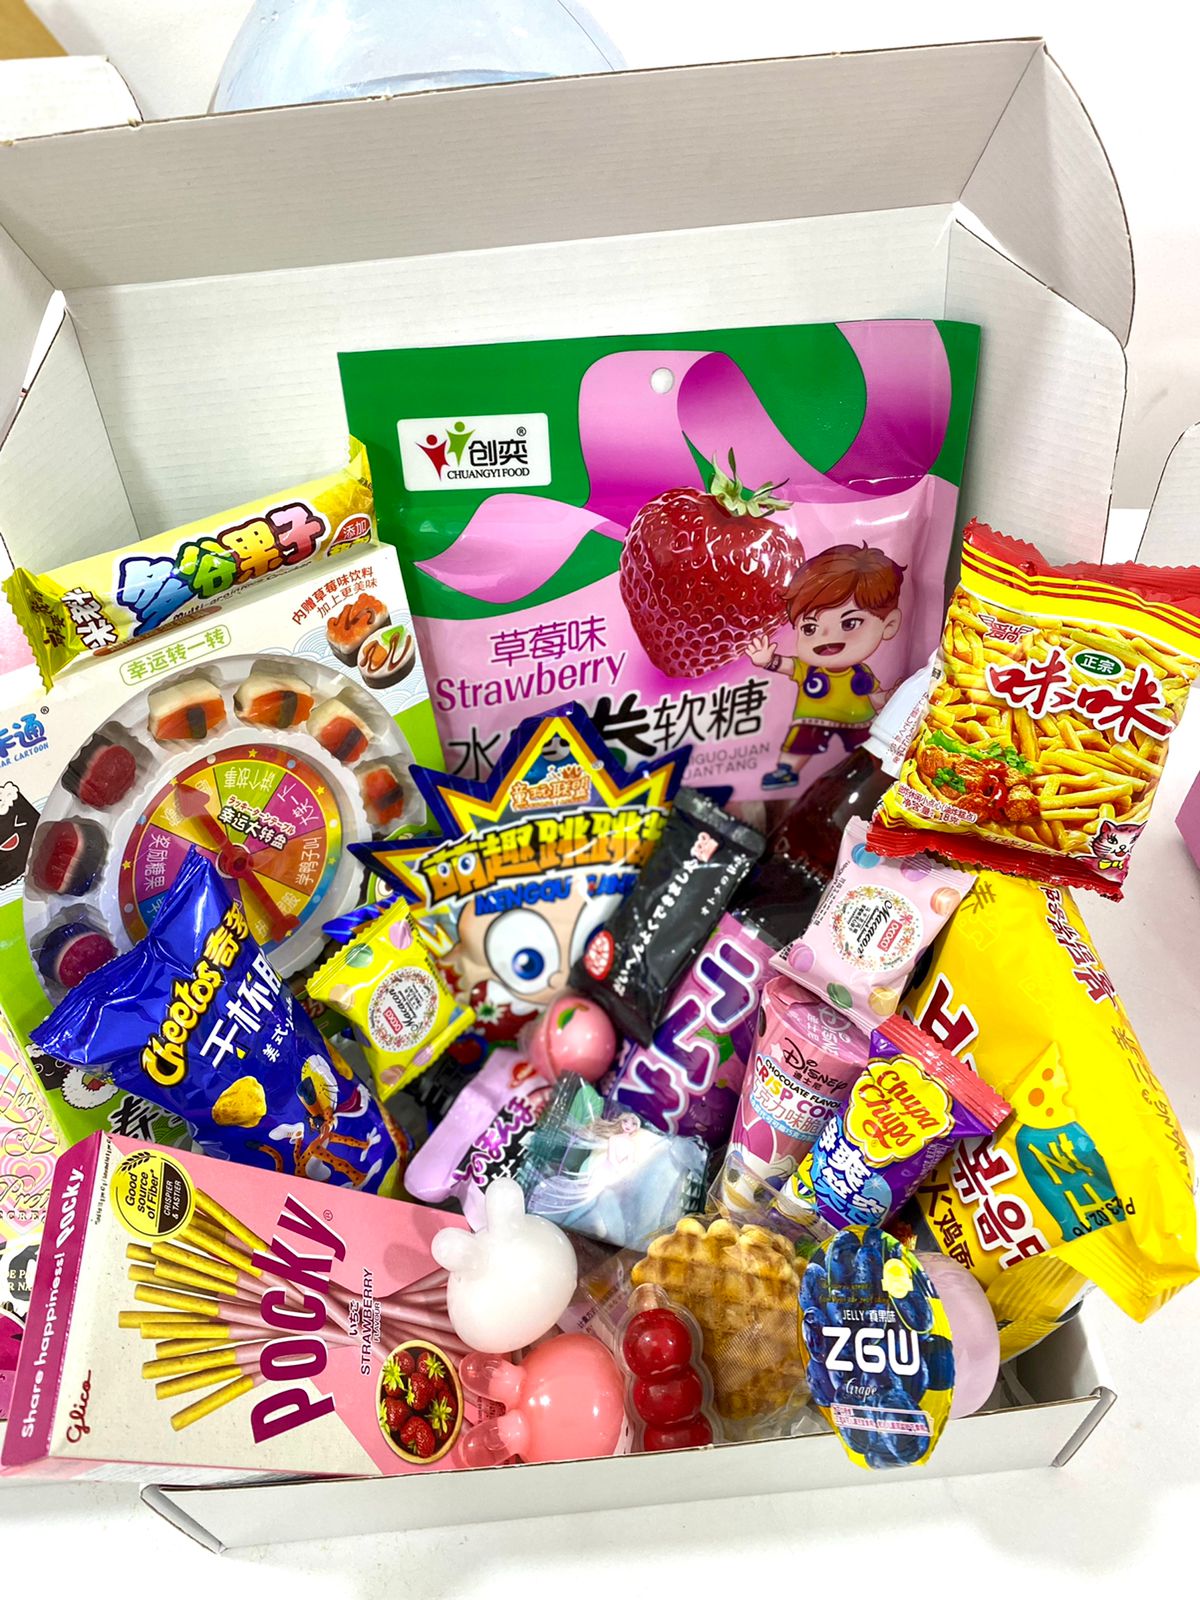 Share box korean food asian challenge - Girlz box